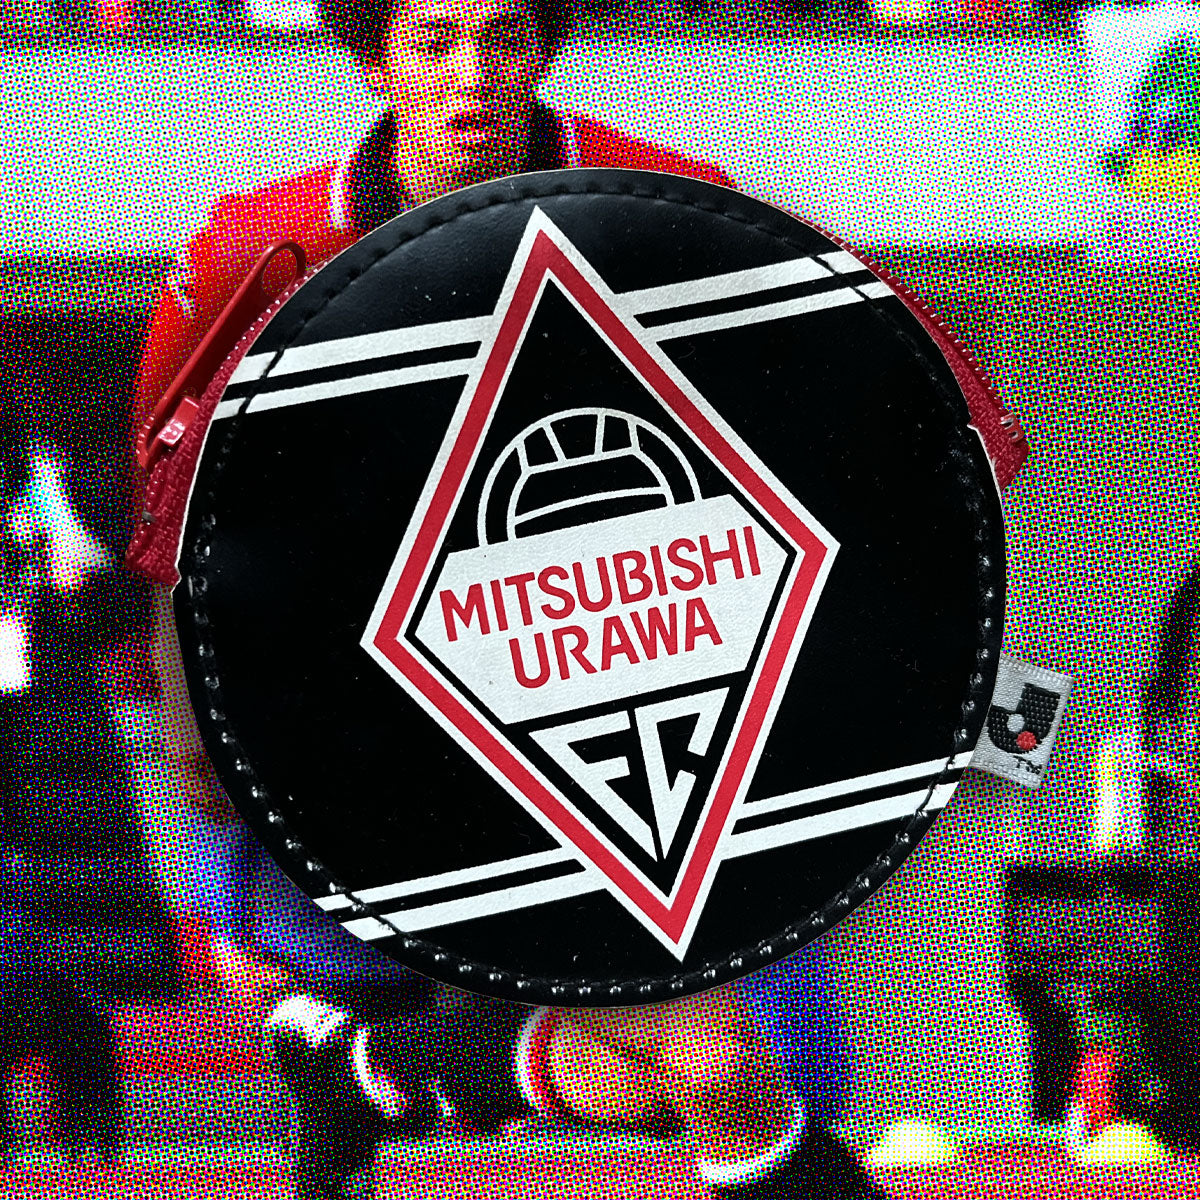 MITSUBISHI URAWA FC J-LEAGUE PURSE